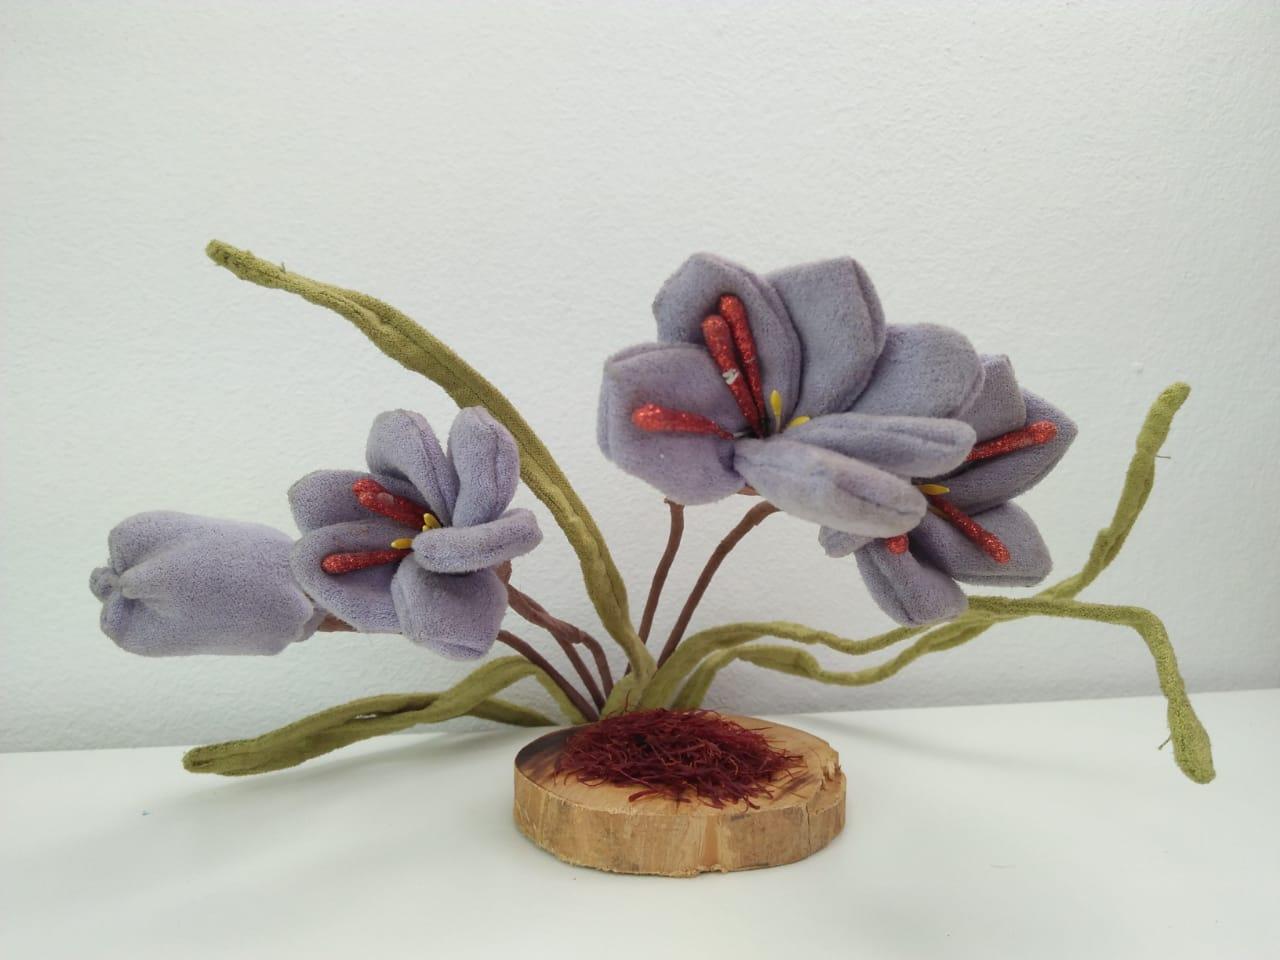 Crocus flowers produce saffron